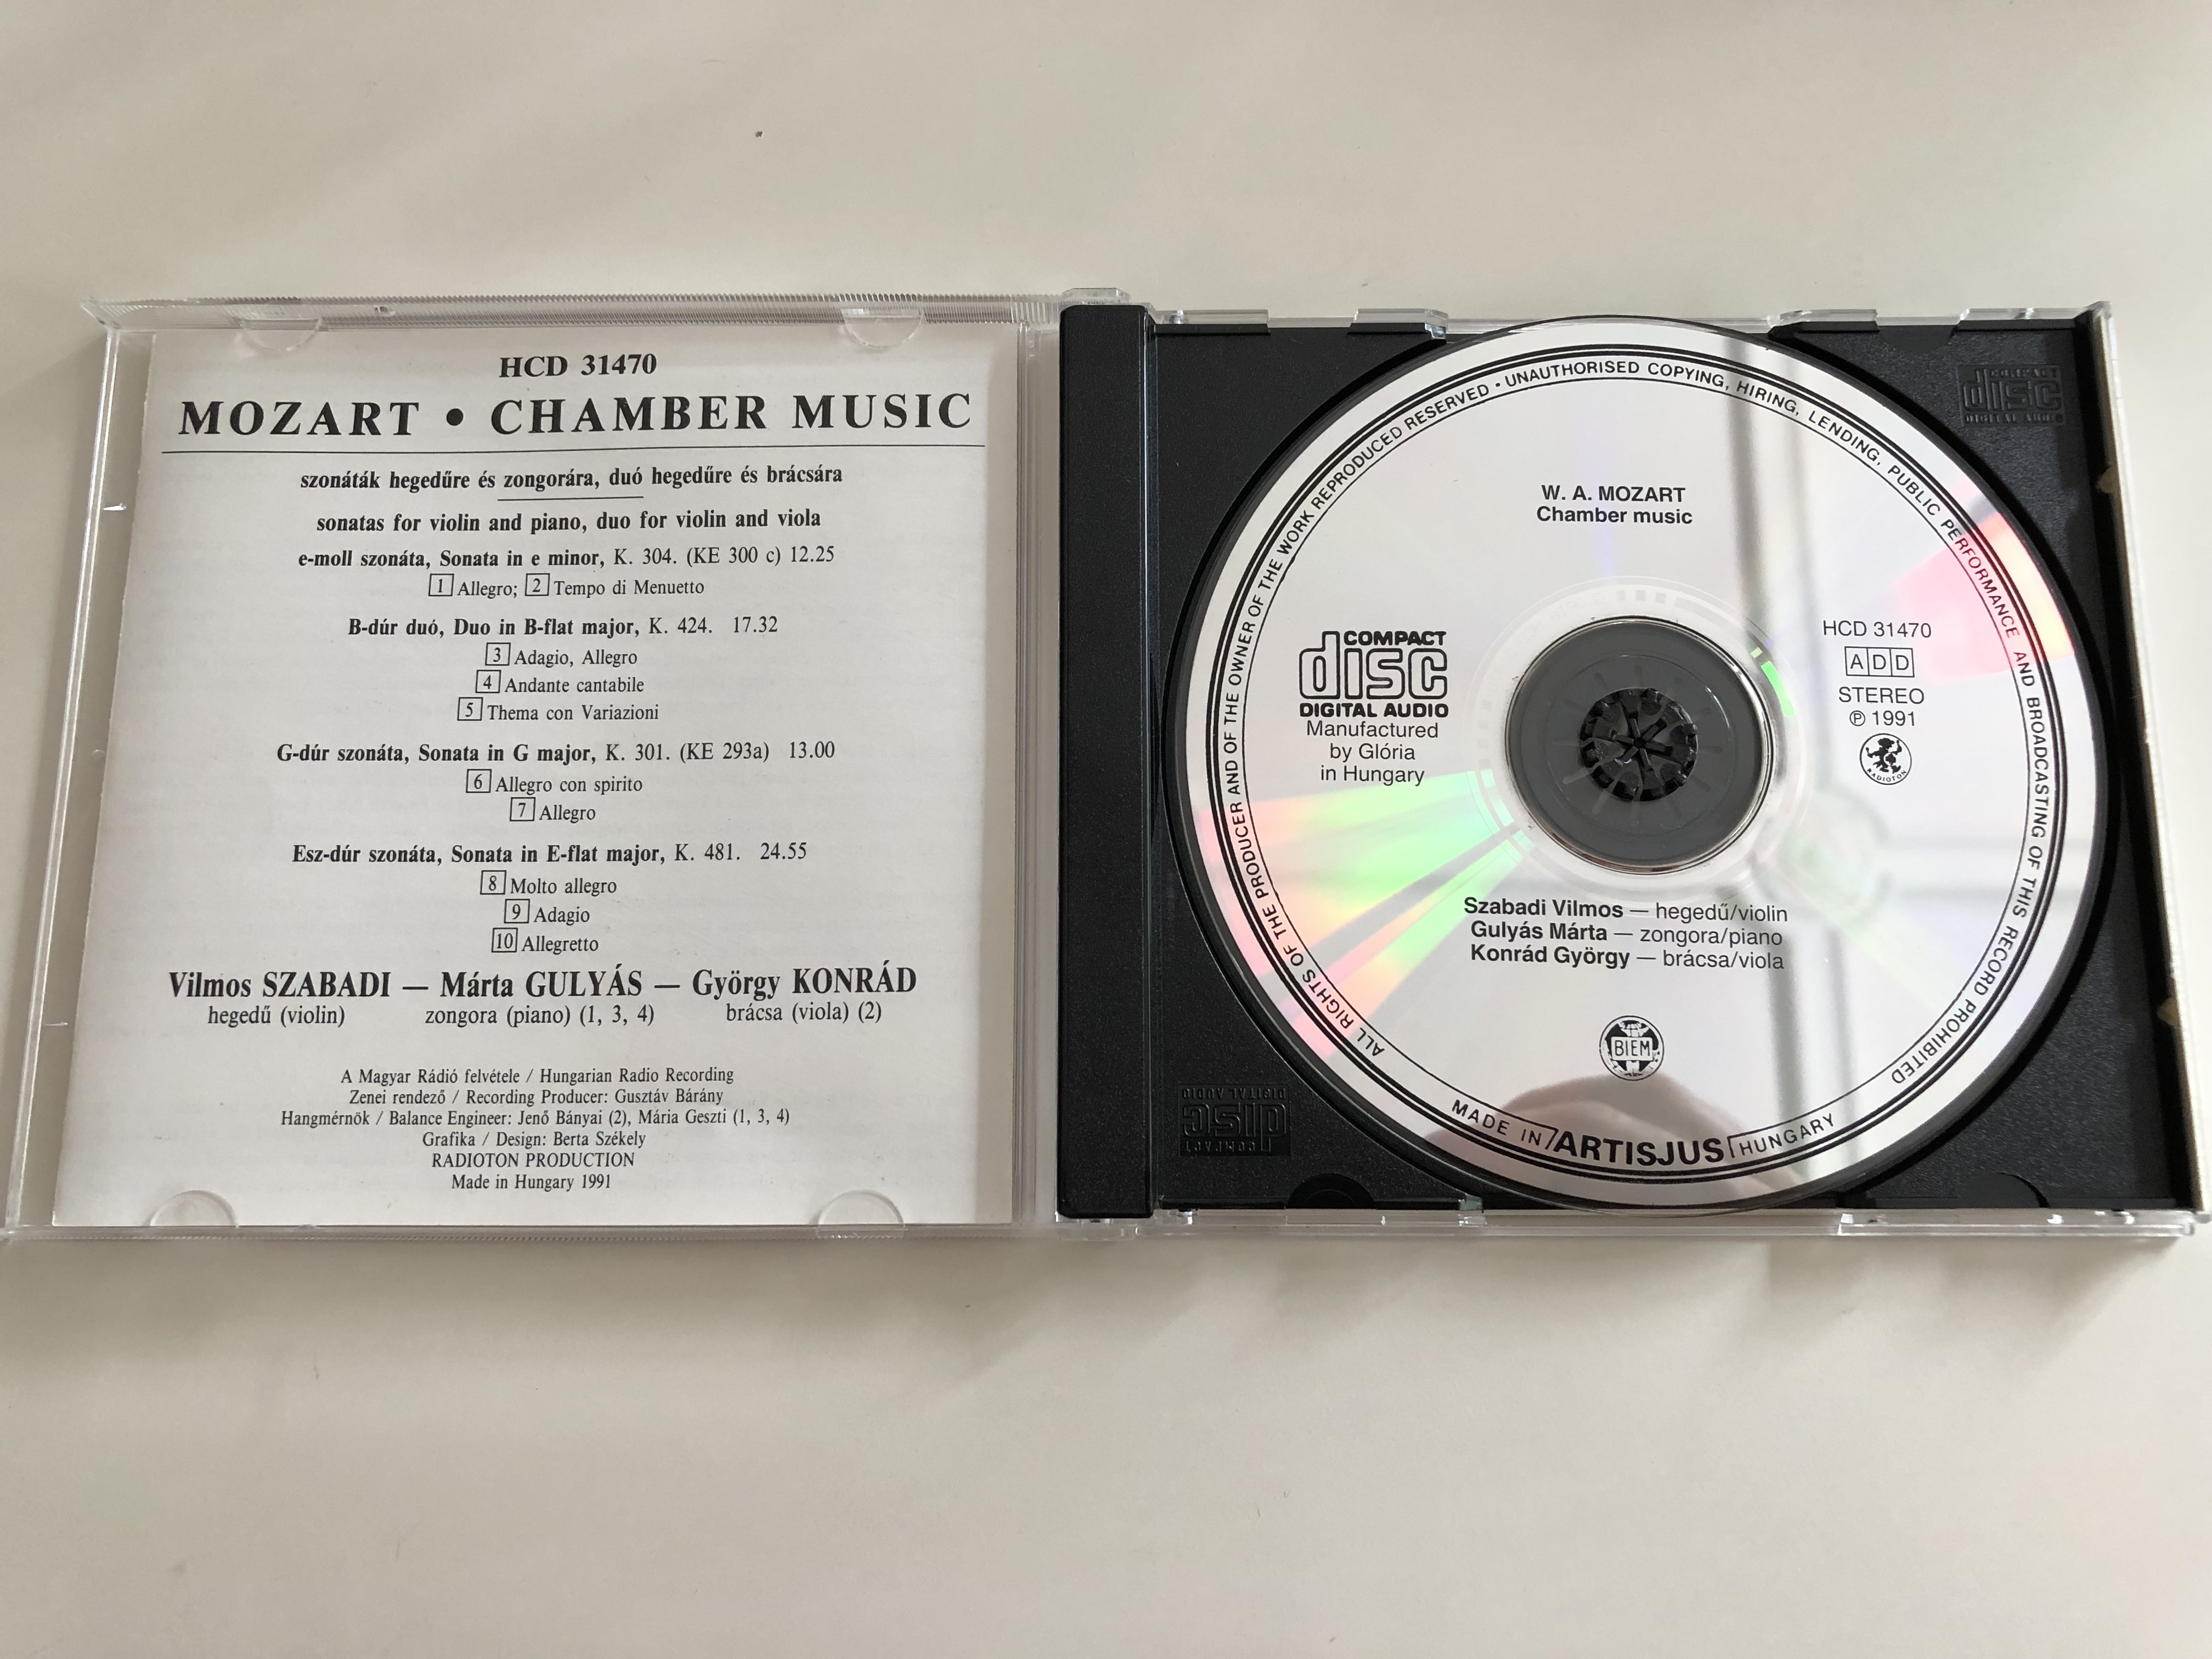 w.-a.-mozart-chamber-music-vilmos-szabadi-violin-m-rta-guly-s-piano-gy-rgy-konr-d-viola-hcd-31470-audio-cd-1991-6-.jpg